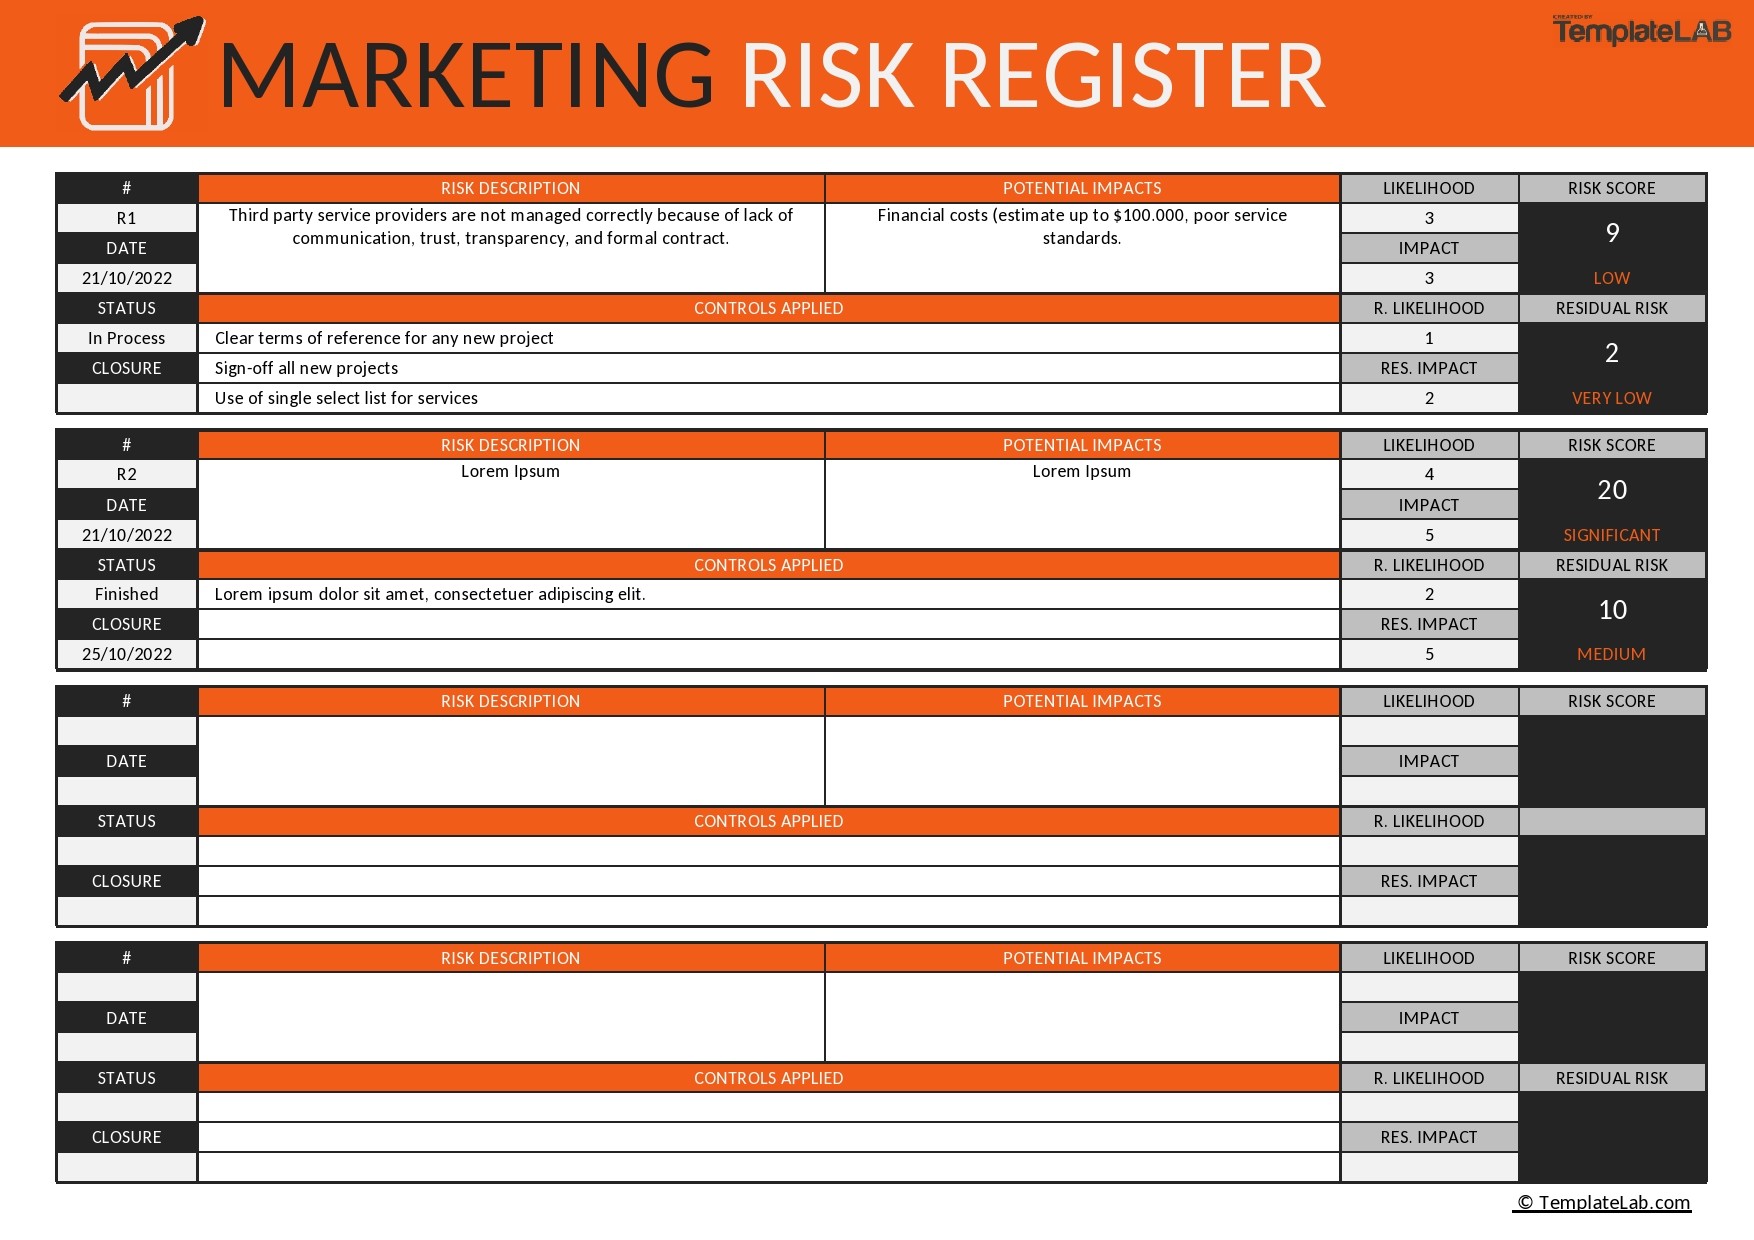 Free Marketing Risk Register Template - TemplateLab.com